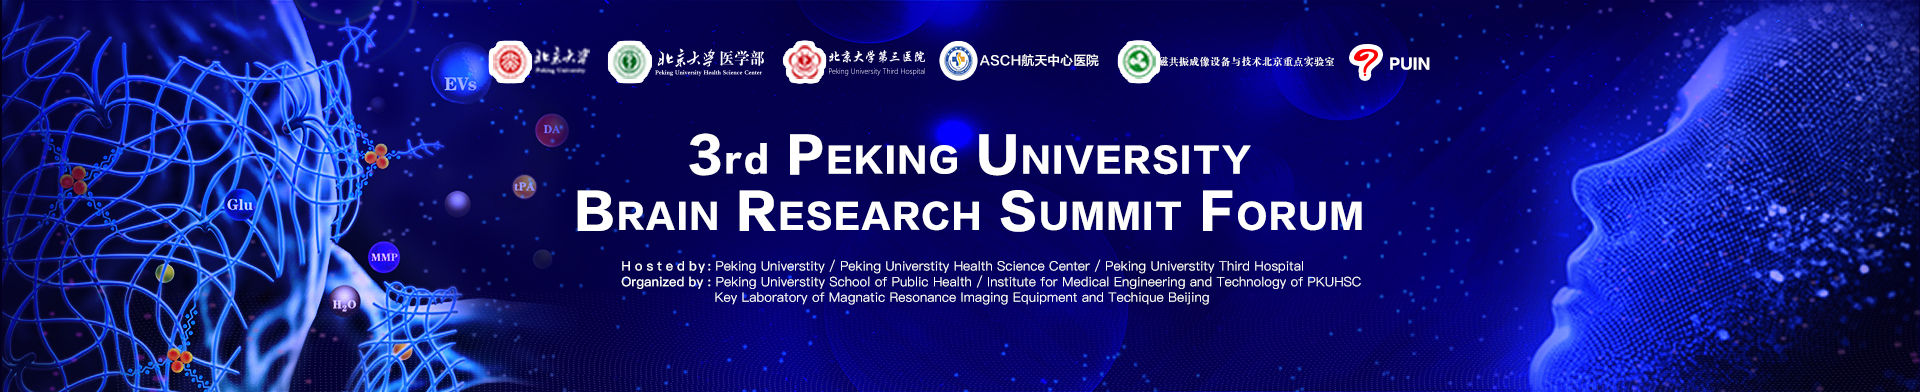 Third Peking University International Brain Research Forum